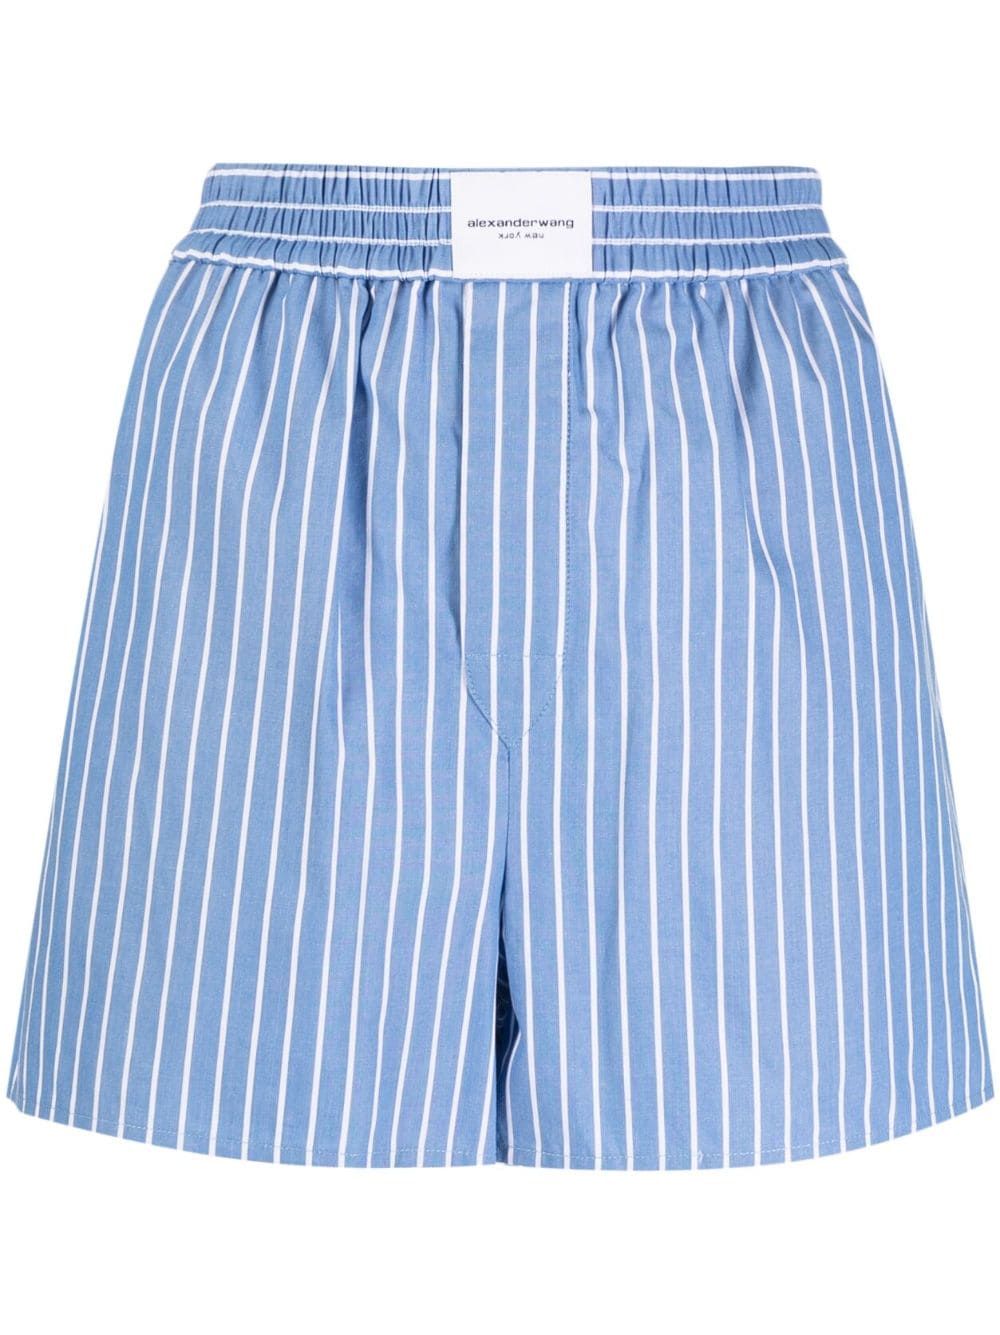 Alexander Wang striped cotton boxer shorts - Blue